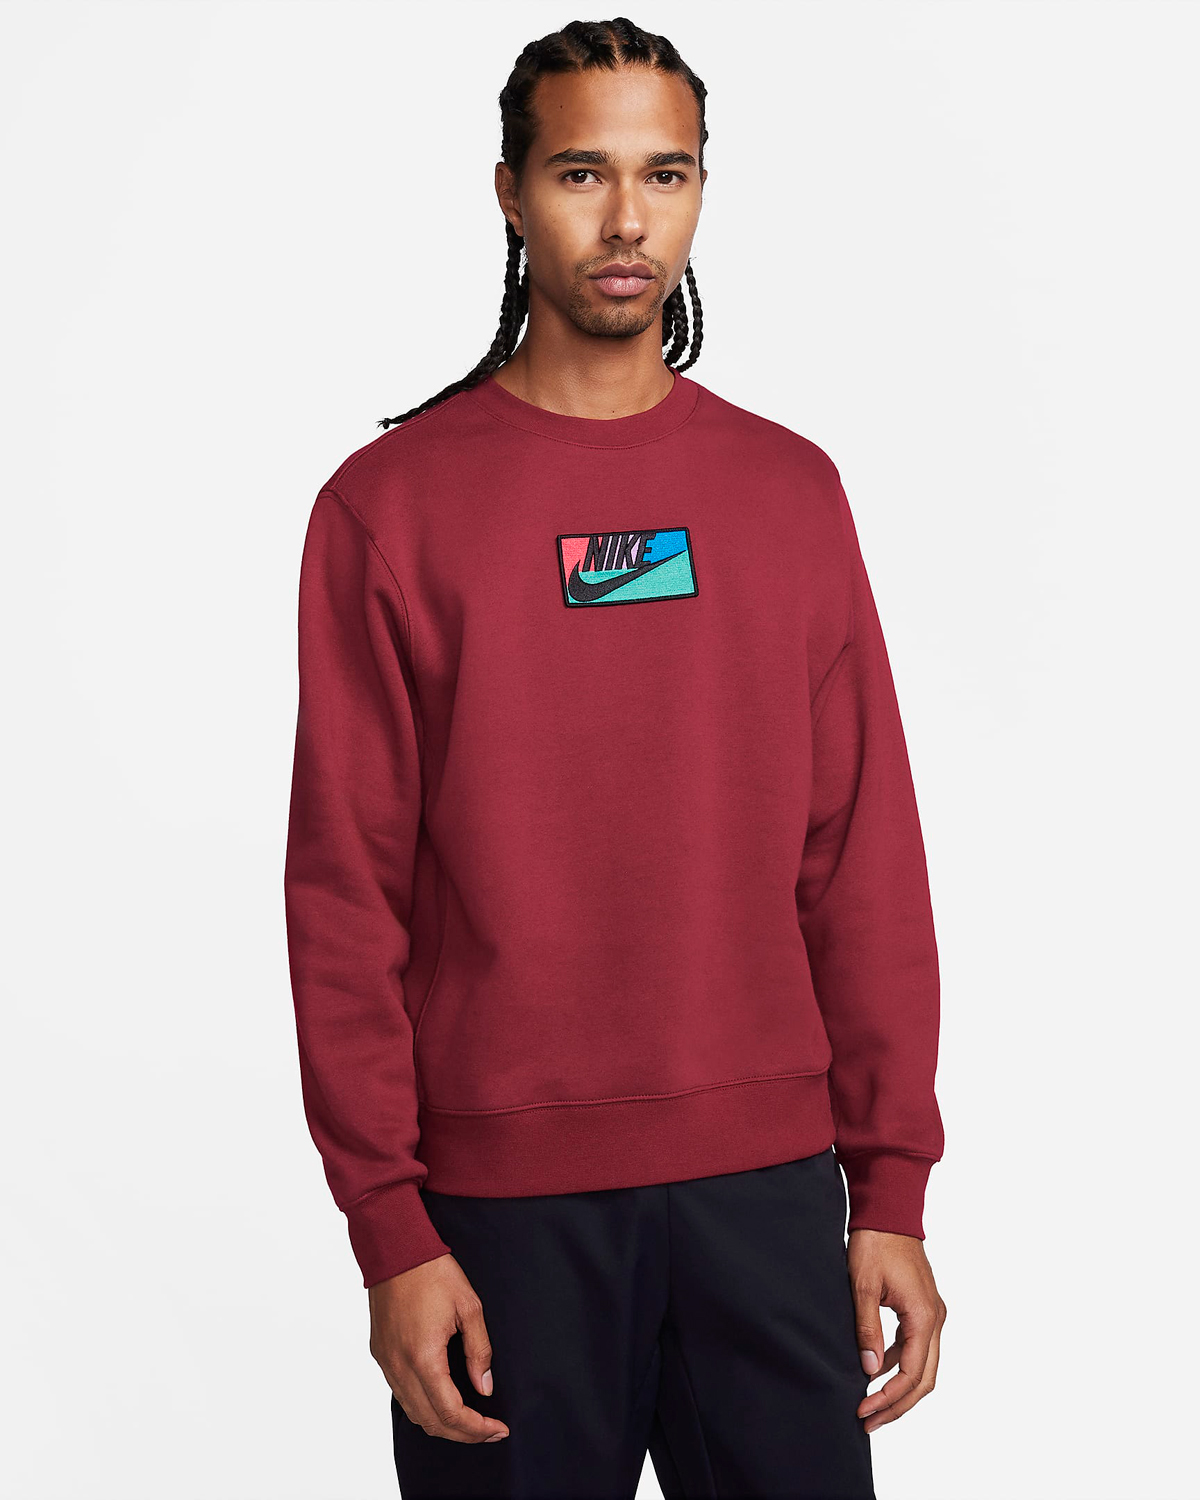 Nike-Club-Fleece-Patch-Crew-Sweatshirt-Team-Red